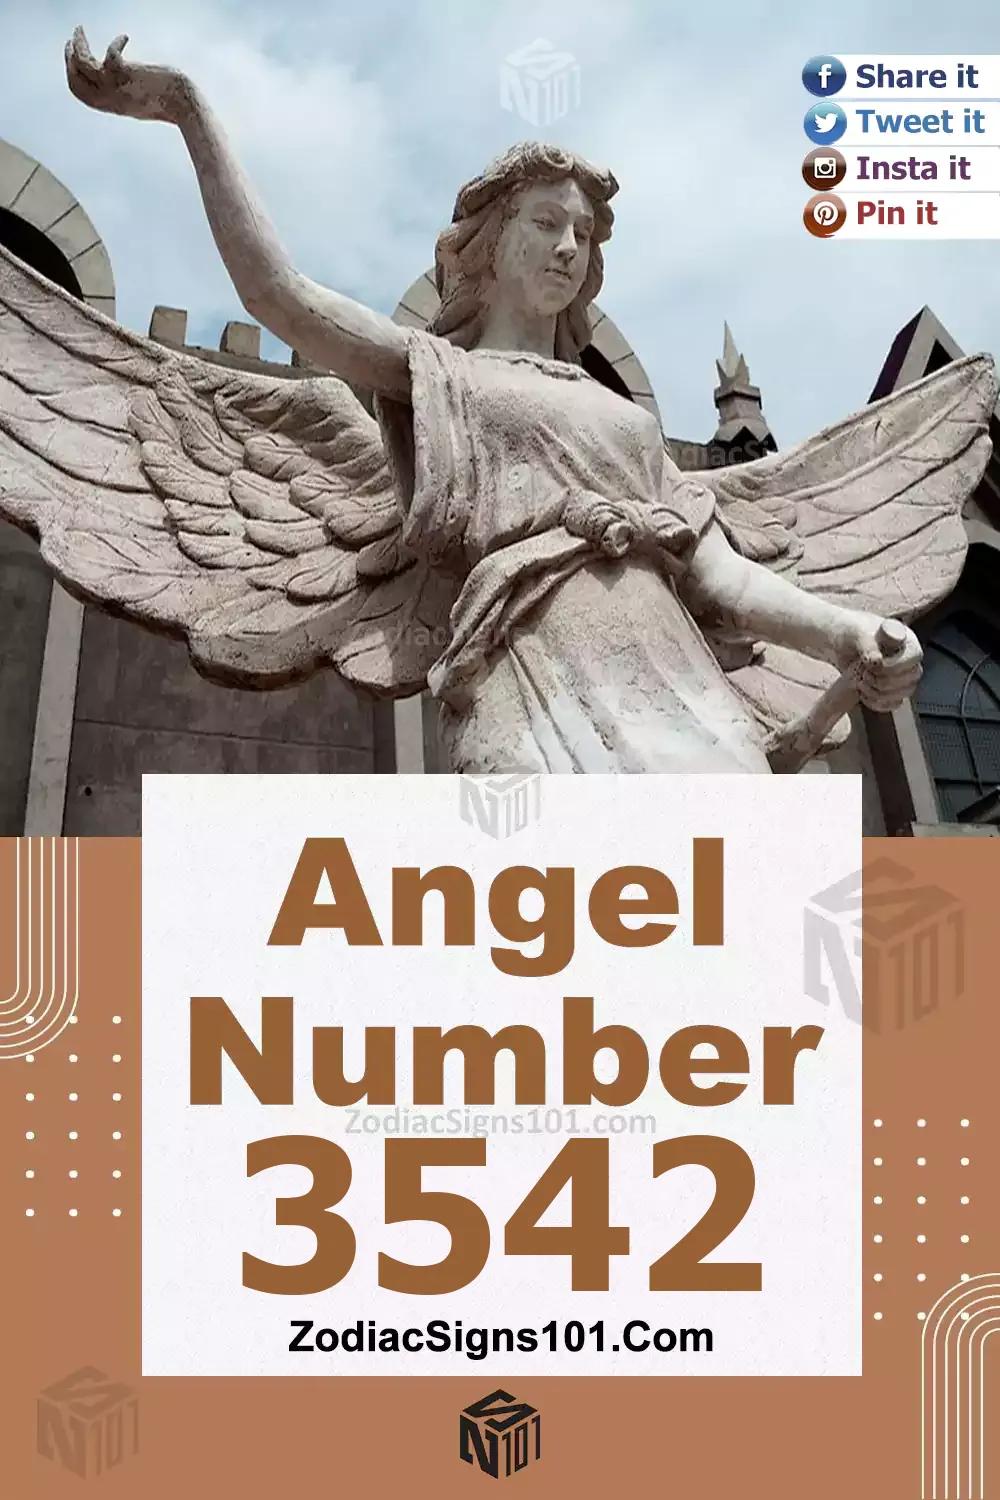 3542-Angel-Number-Meaning.jpg